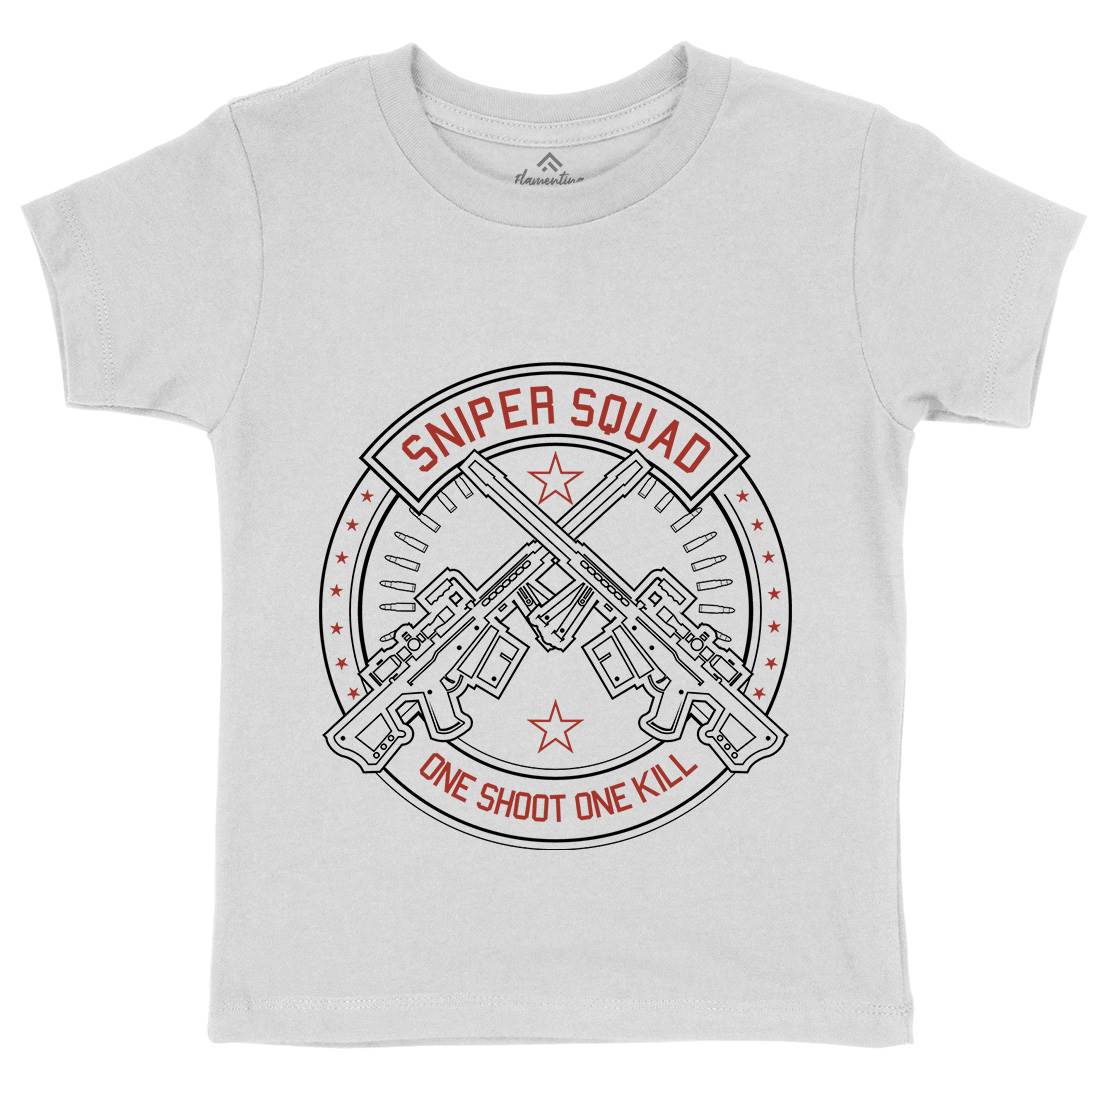 Sniper Squad Kids Crew Neck T-Shirt Army A279